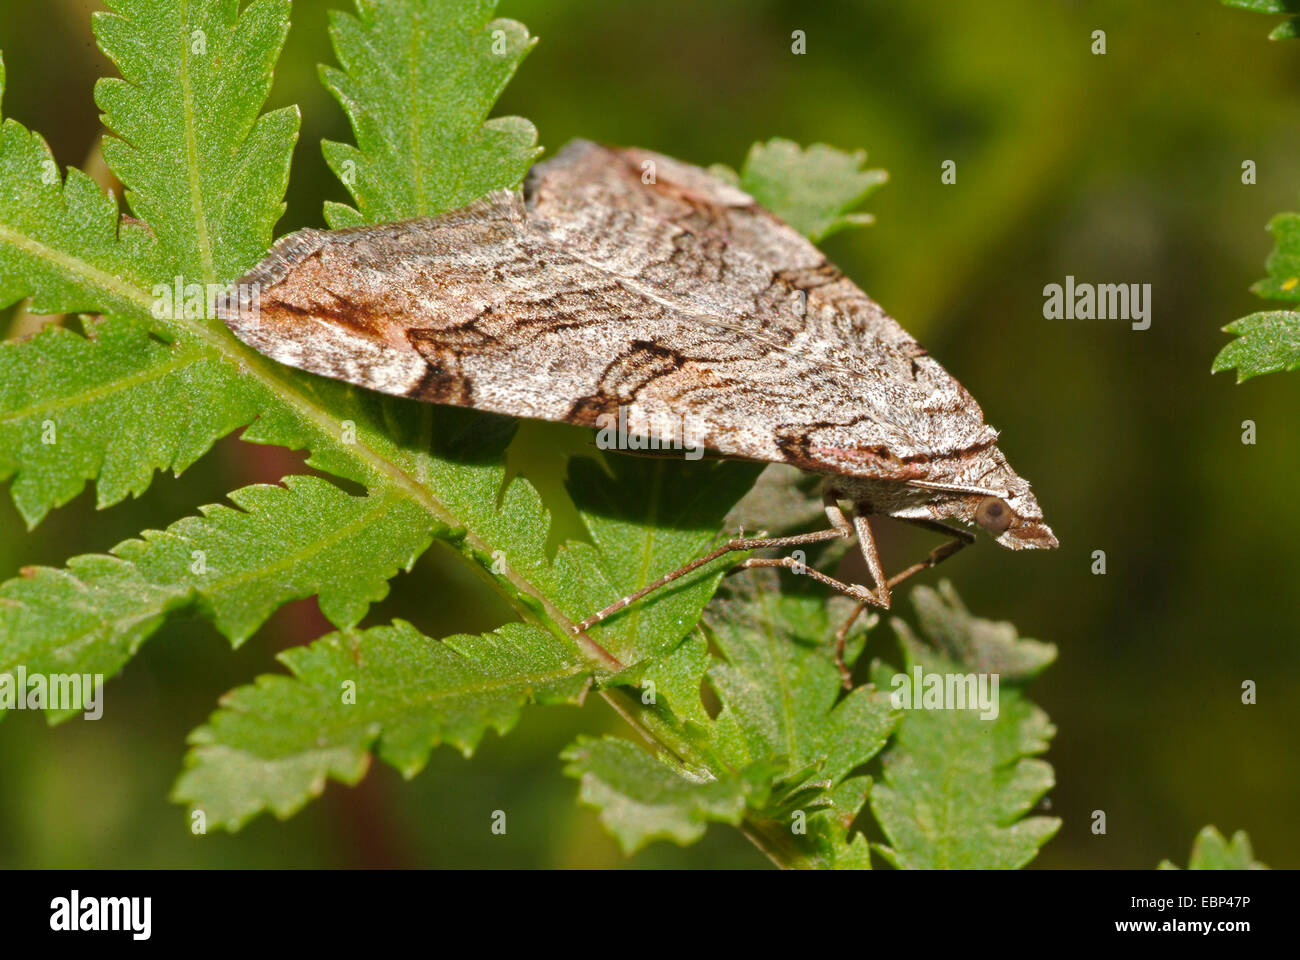 Lesser Treble-bar (Aplocera efformata), sitting on a leaf, Germany Stock Photo